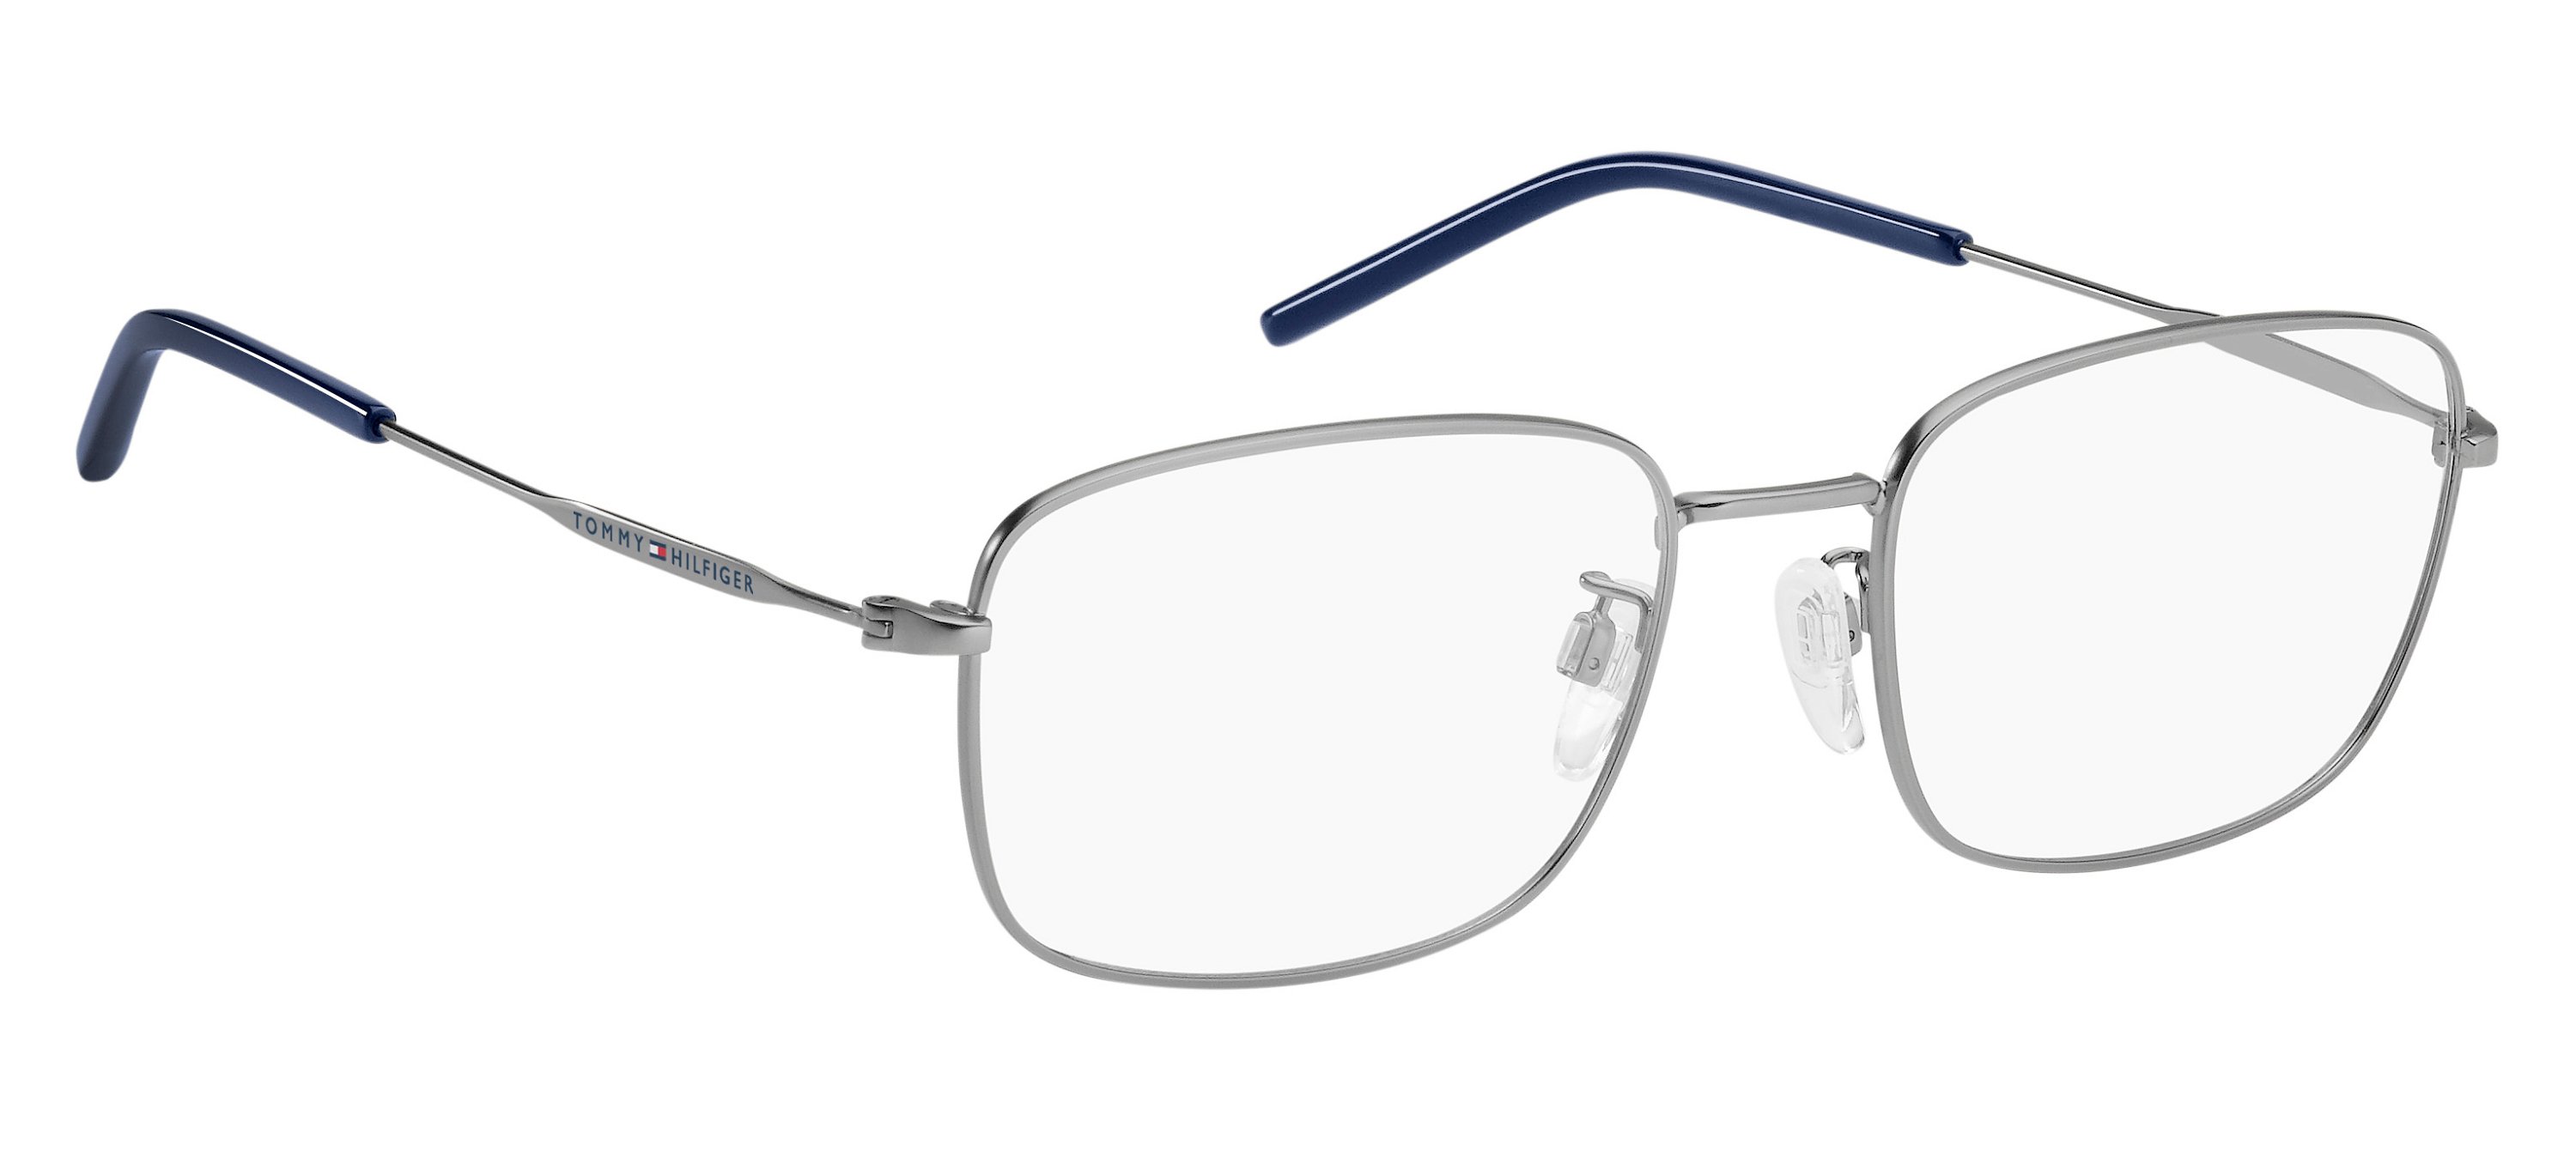 Tommy Hilfiger Brille TH1934/F R81 55 grau matt